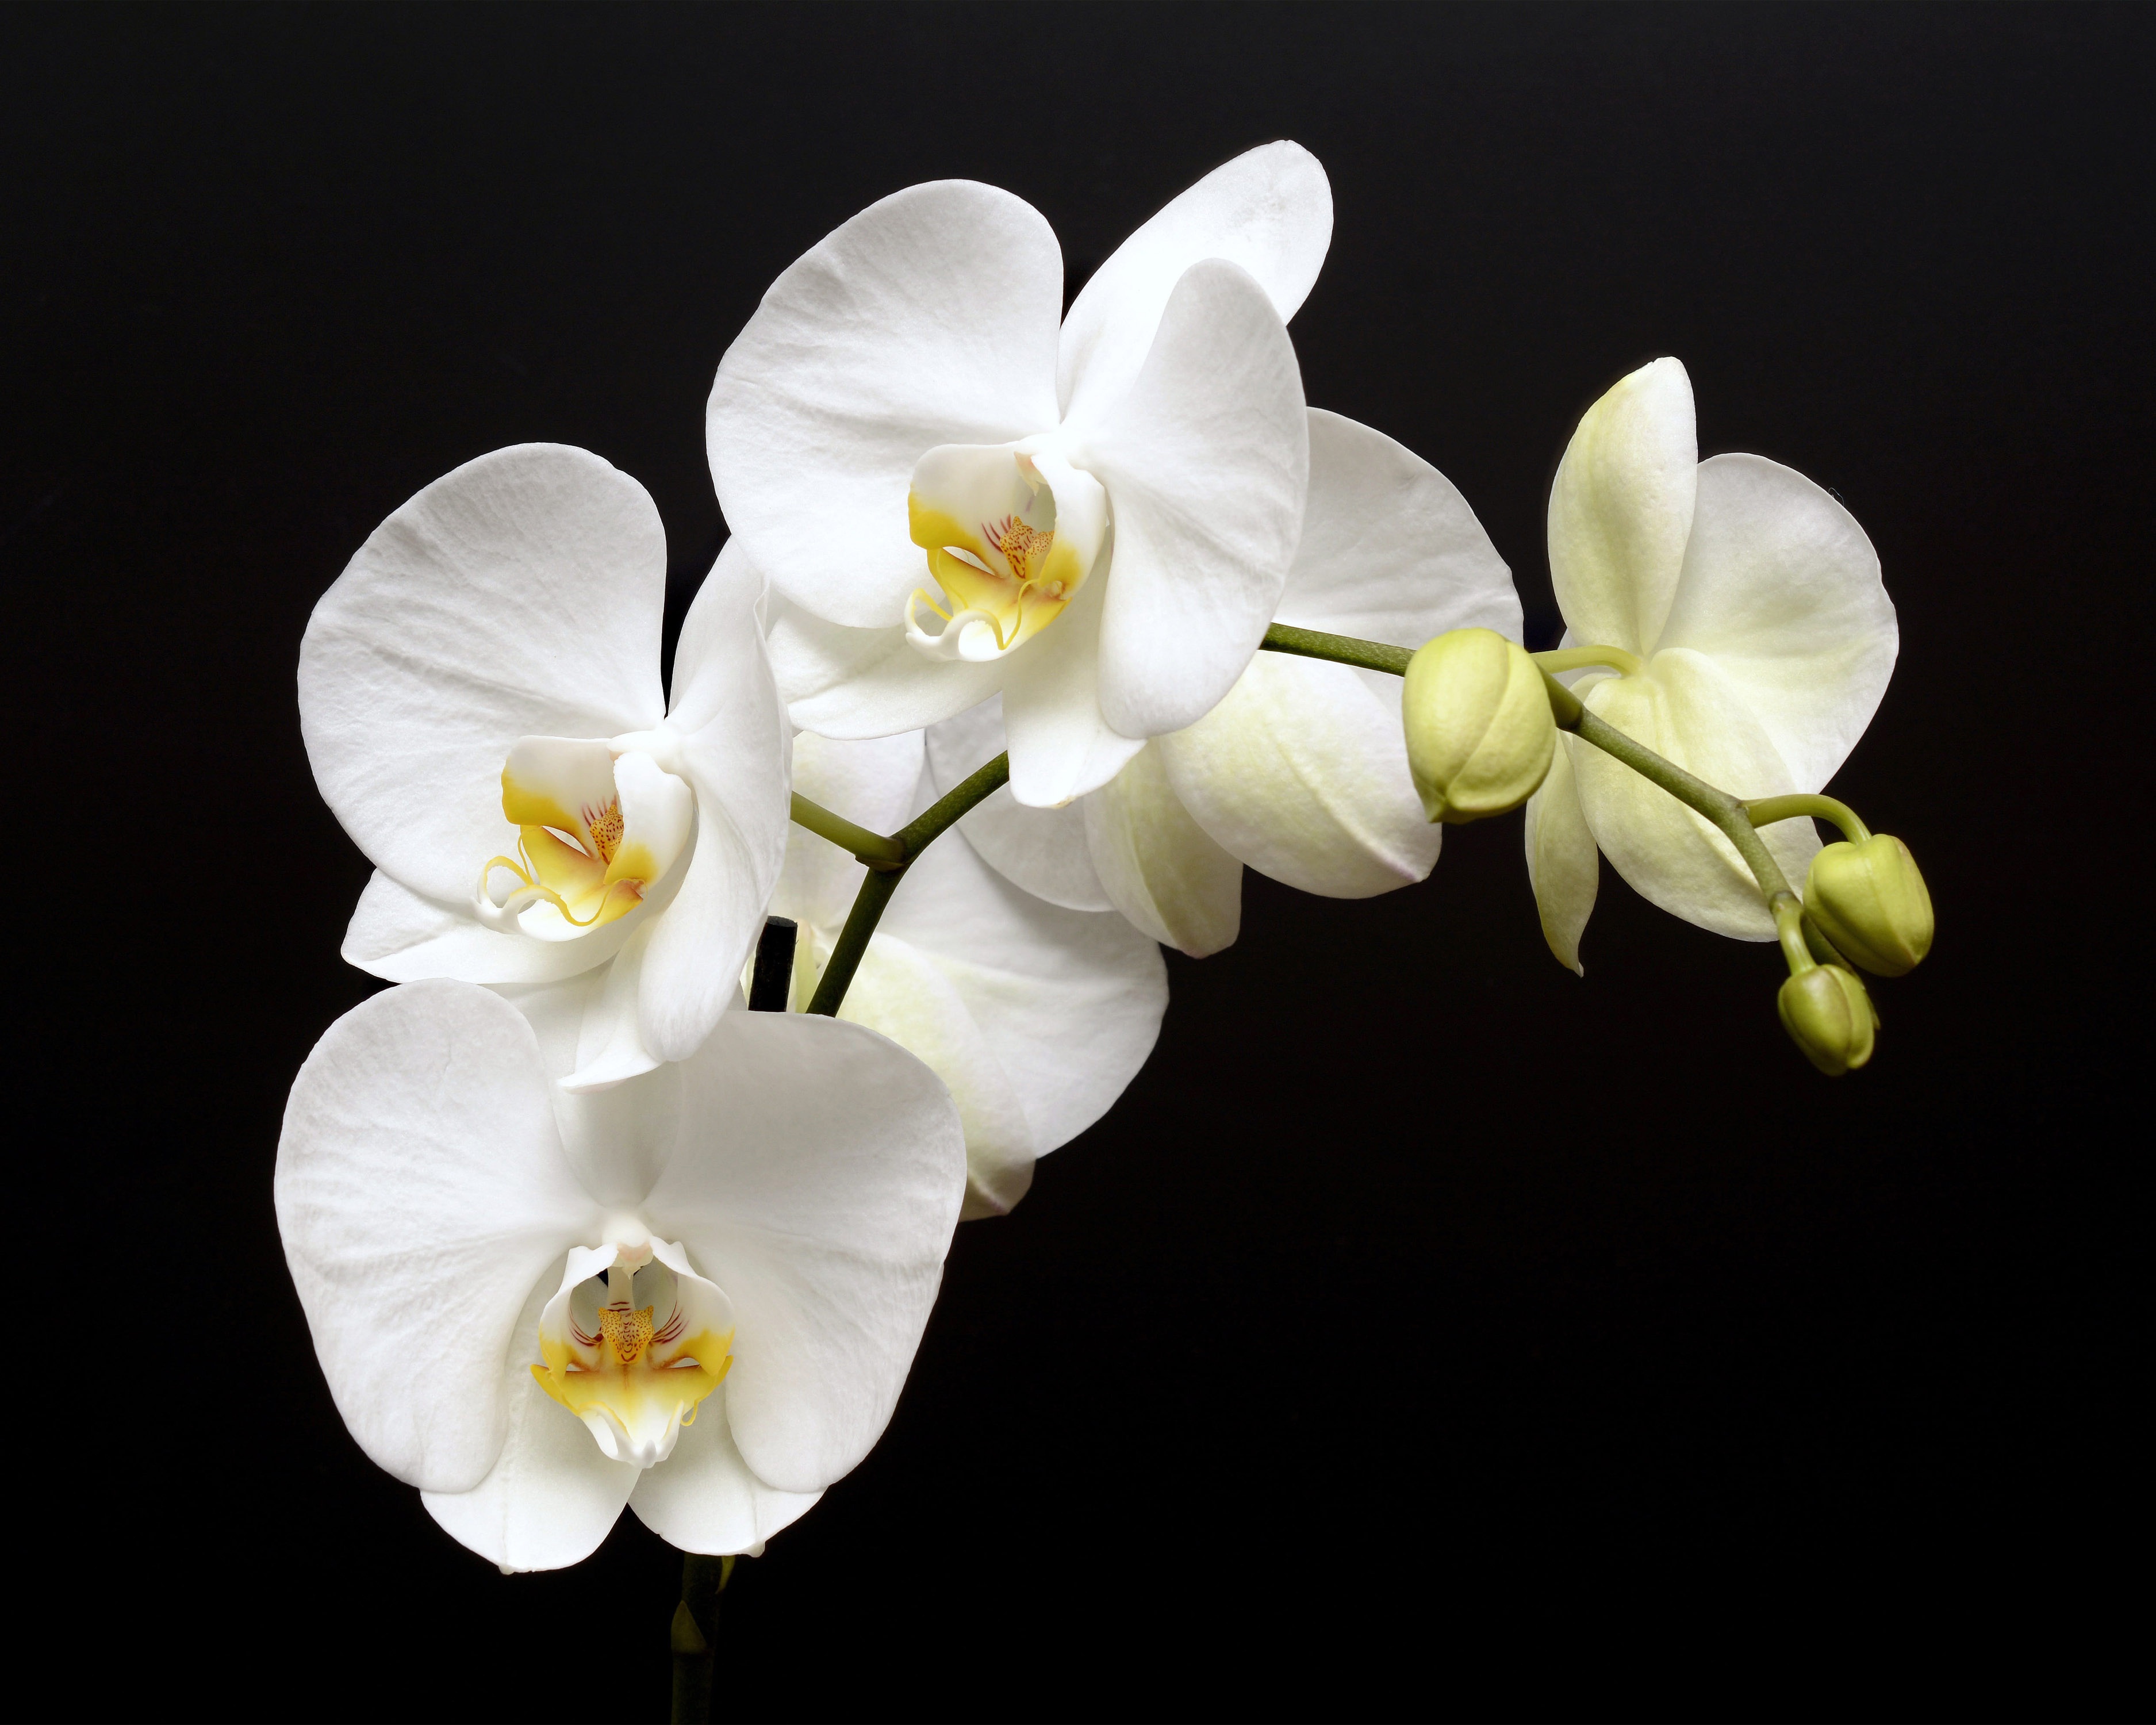 Handy-Wallpaper Blumen, Orchidee, Erde/natur kostenlos herunterladen.